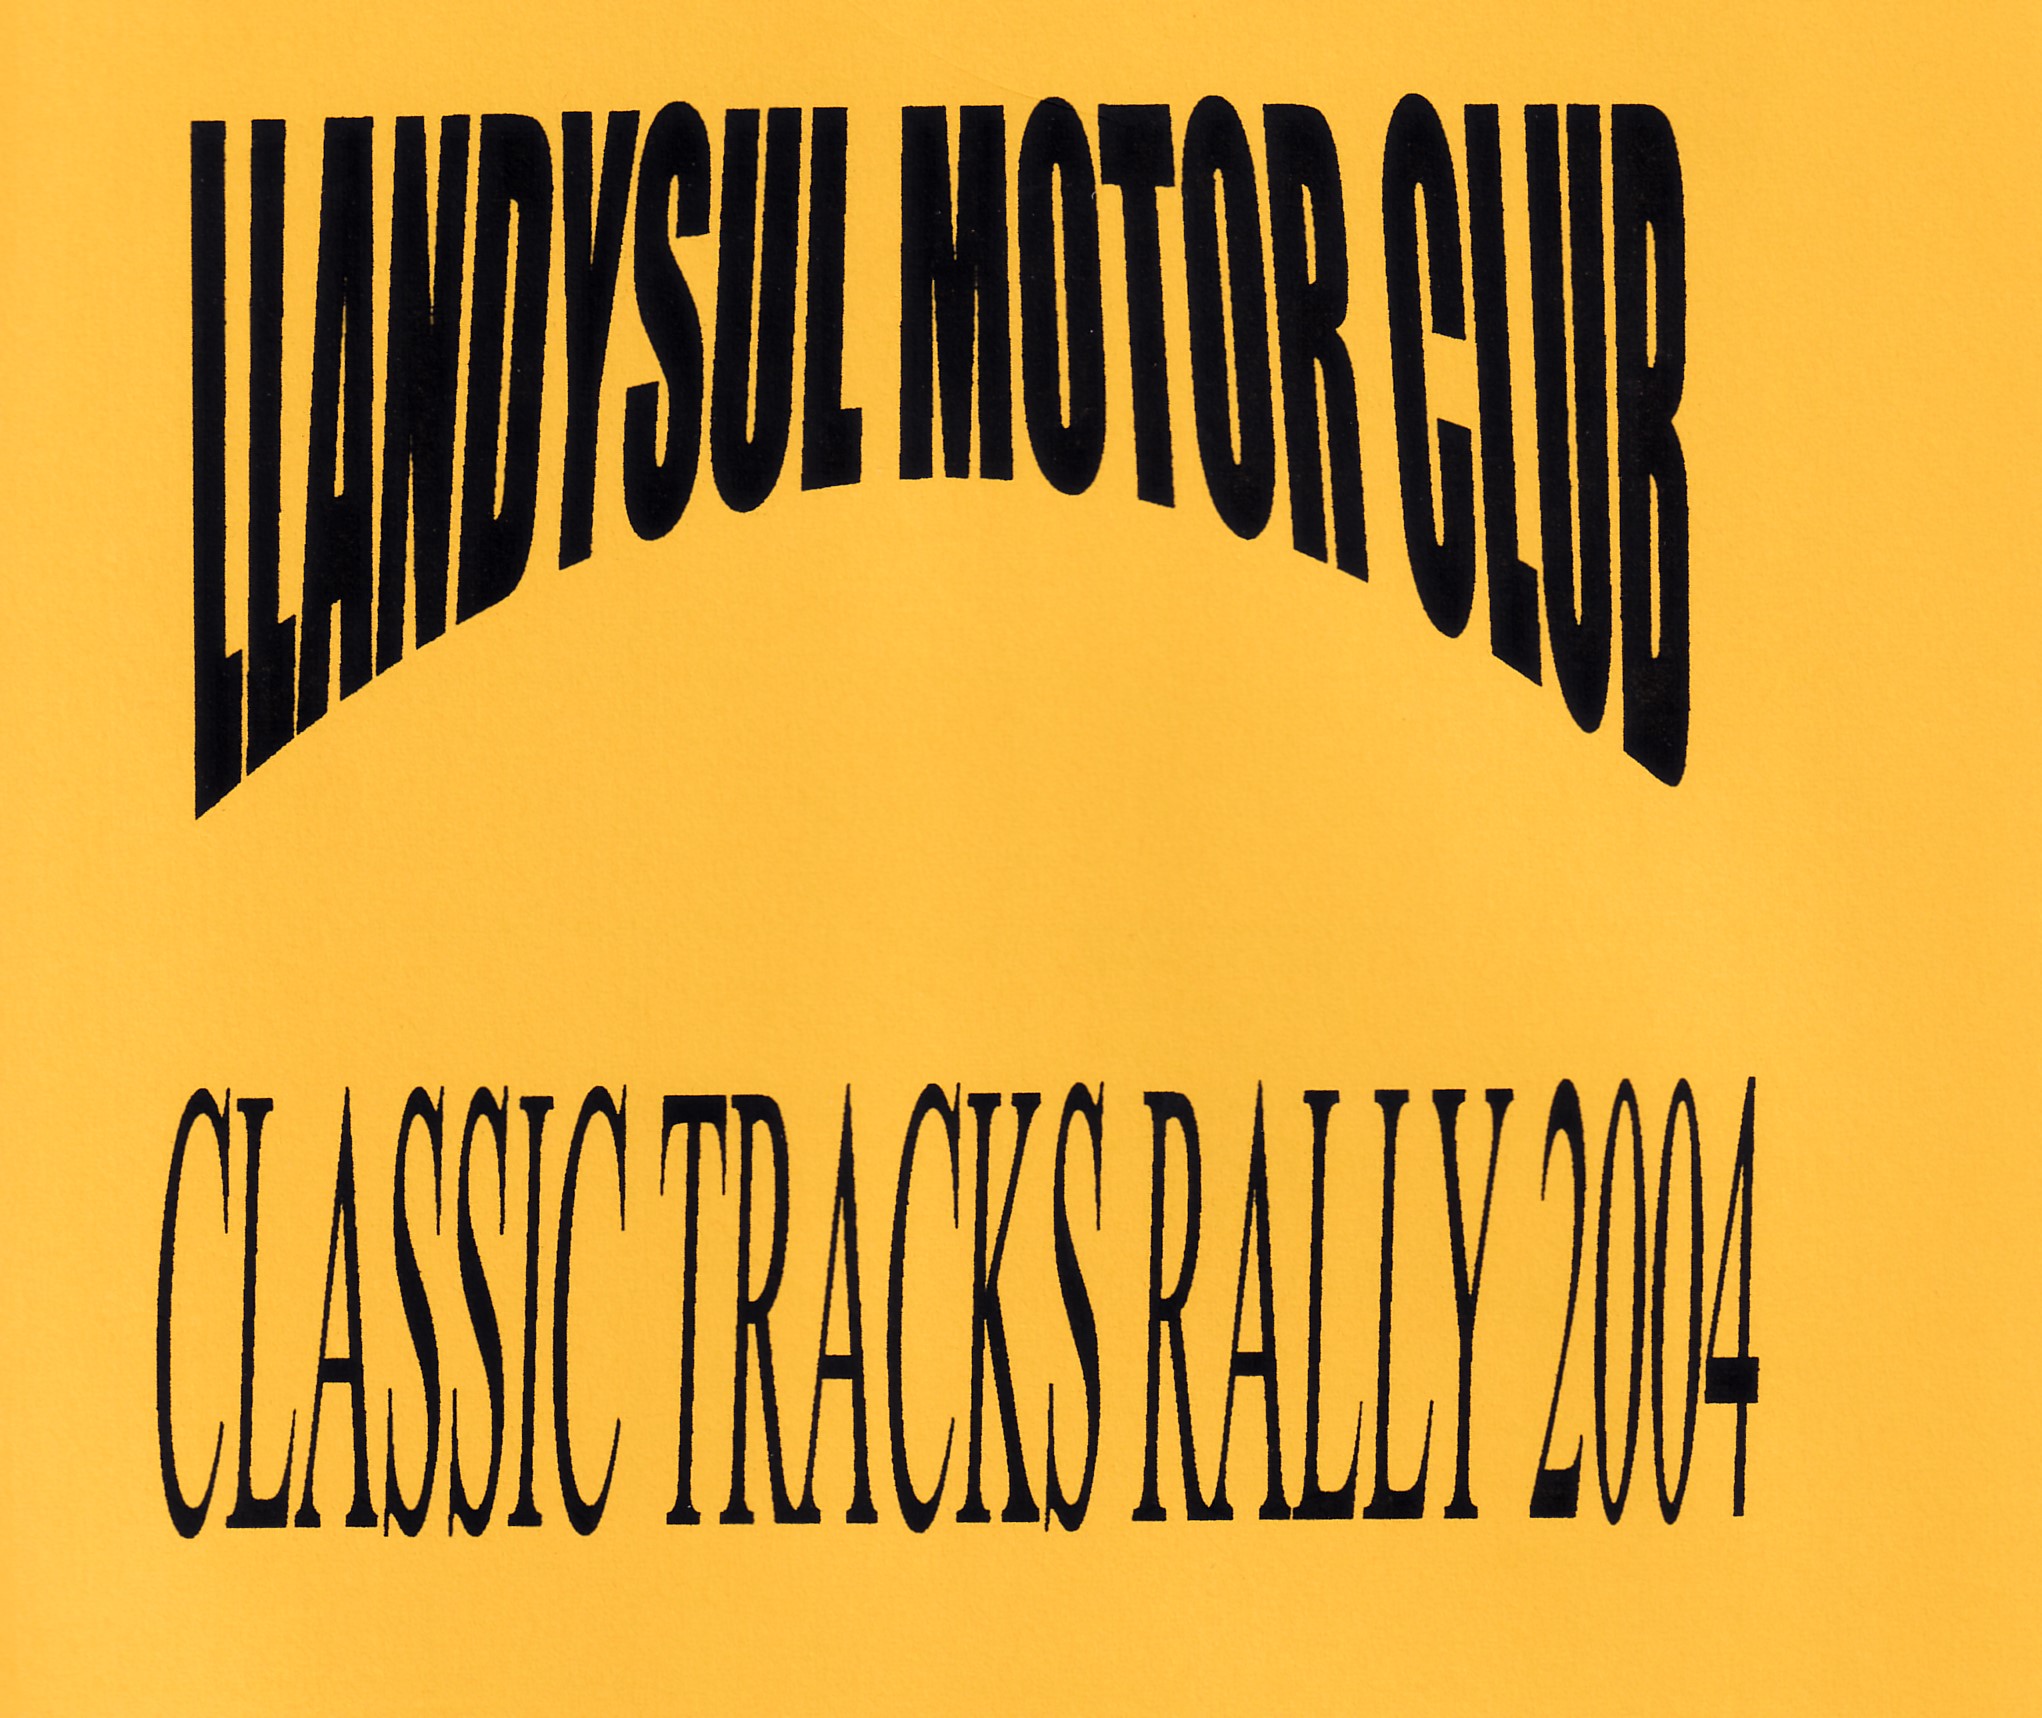 Classic Tracks Rally 2004